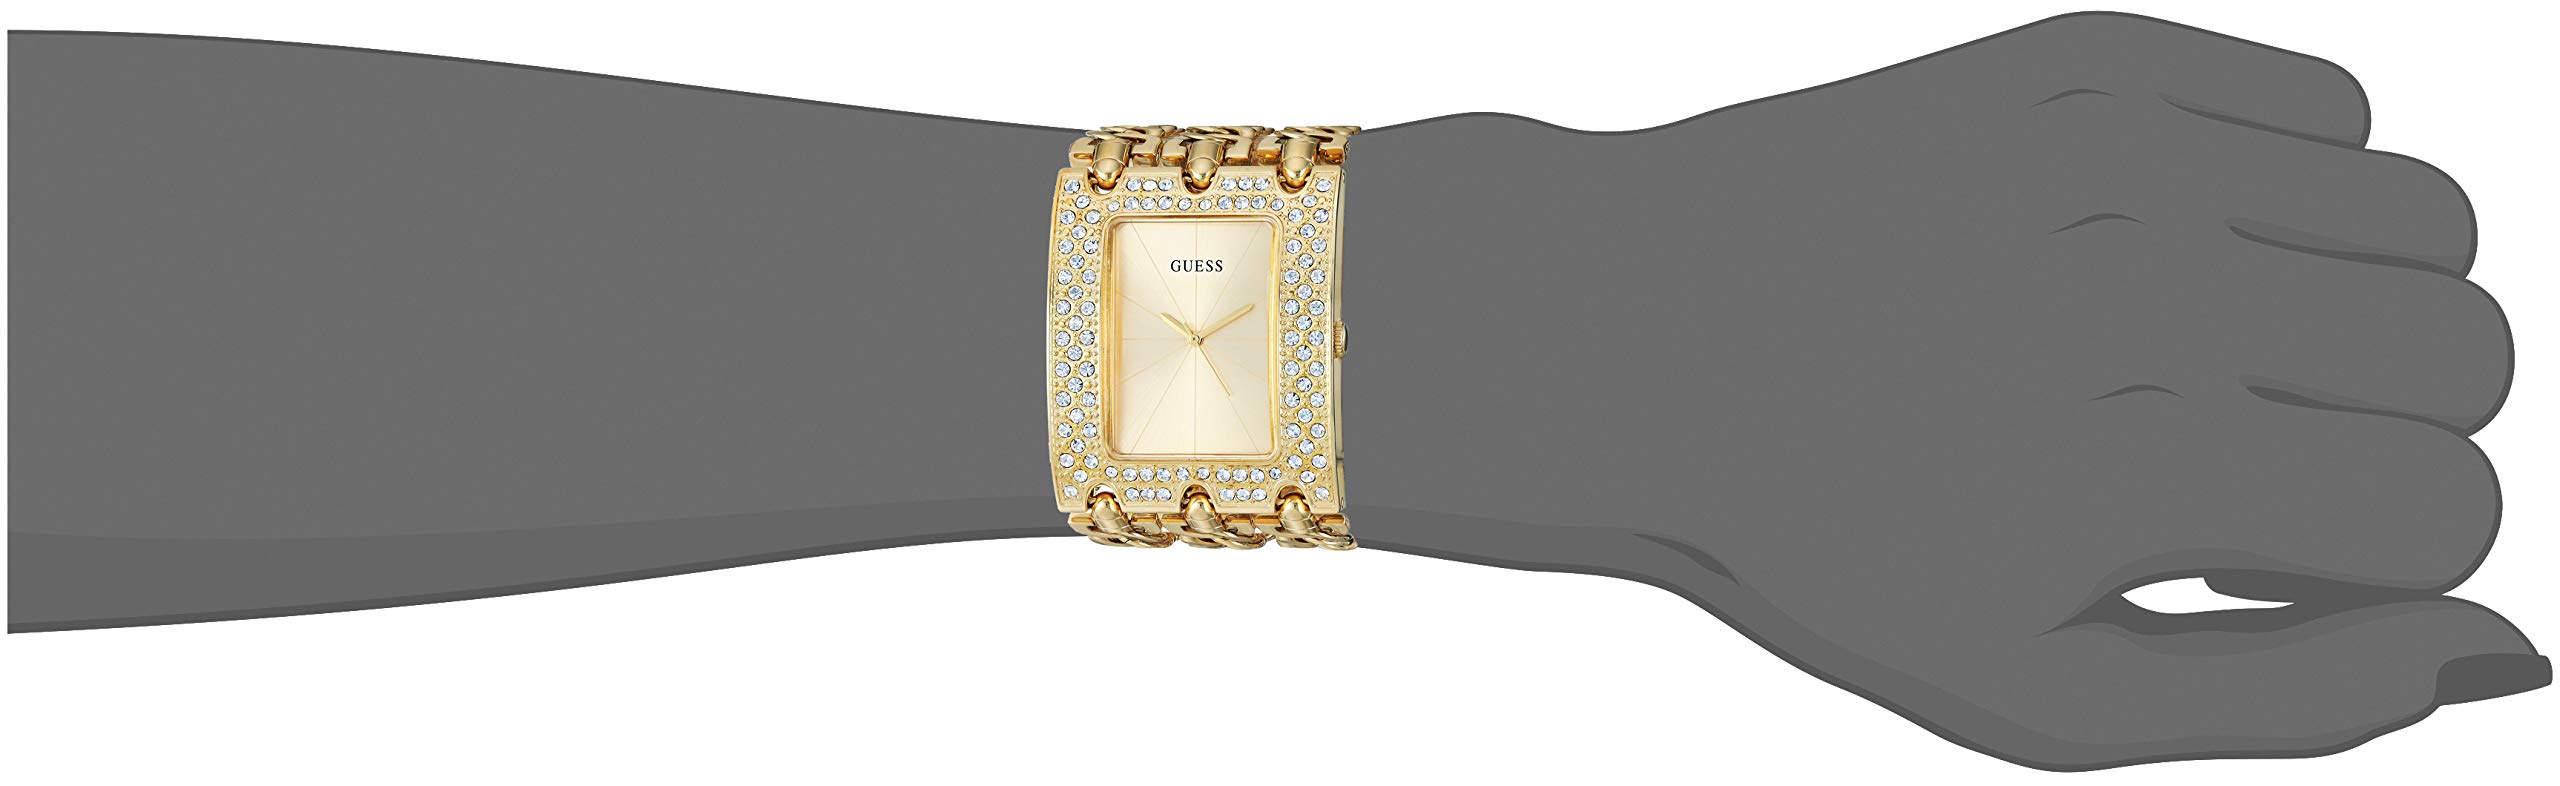 GUESS Women's Analog Display Quartz Gold Watch